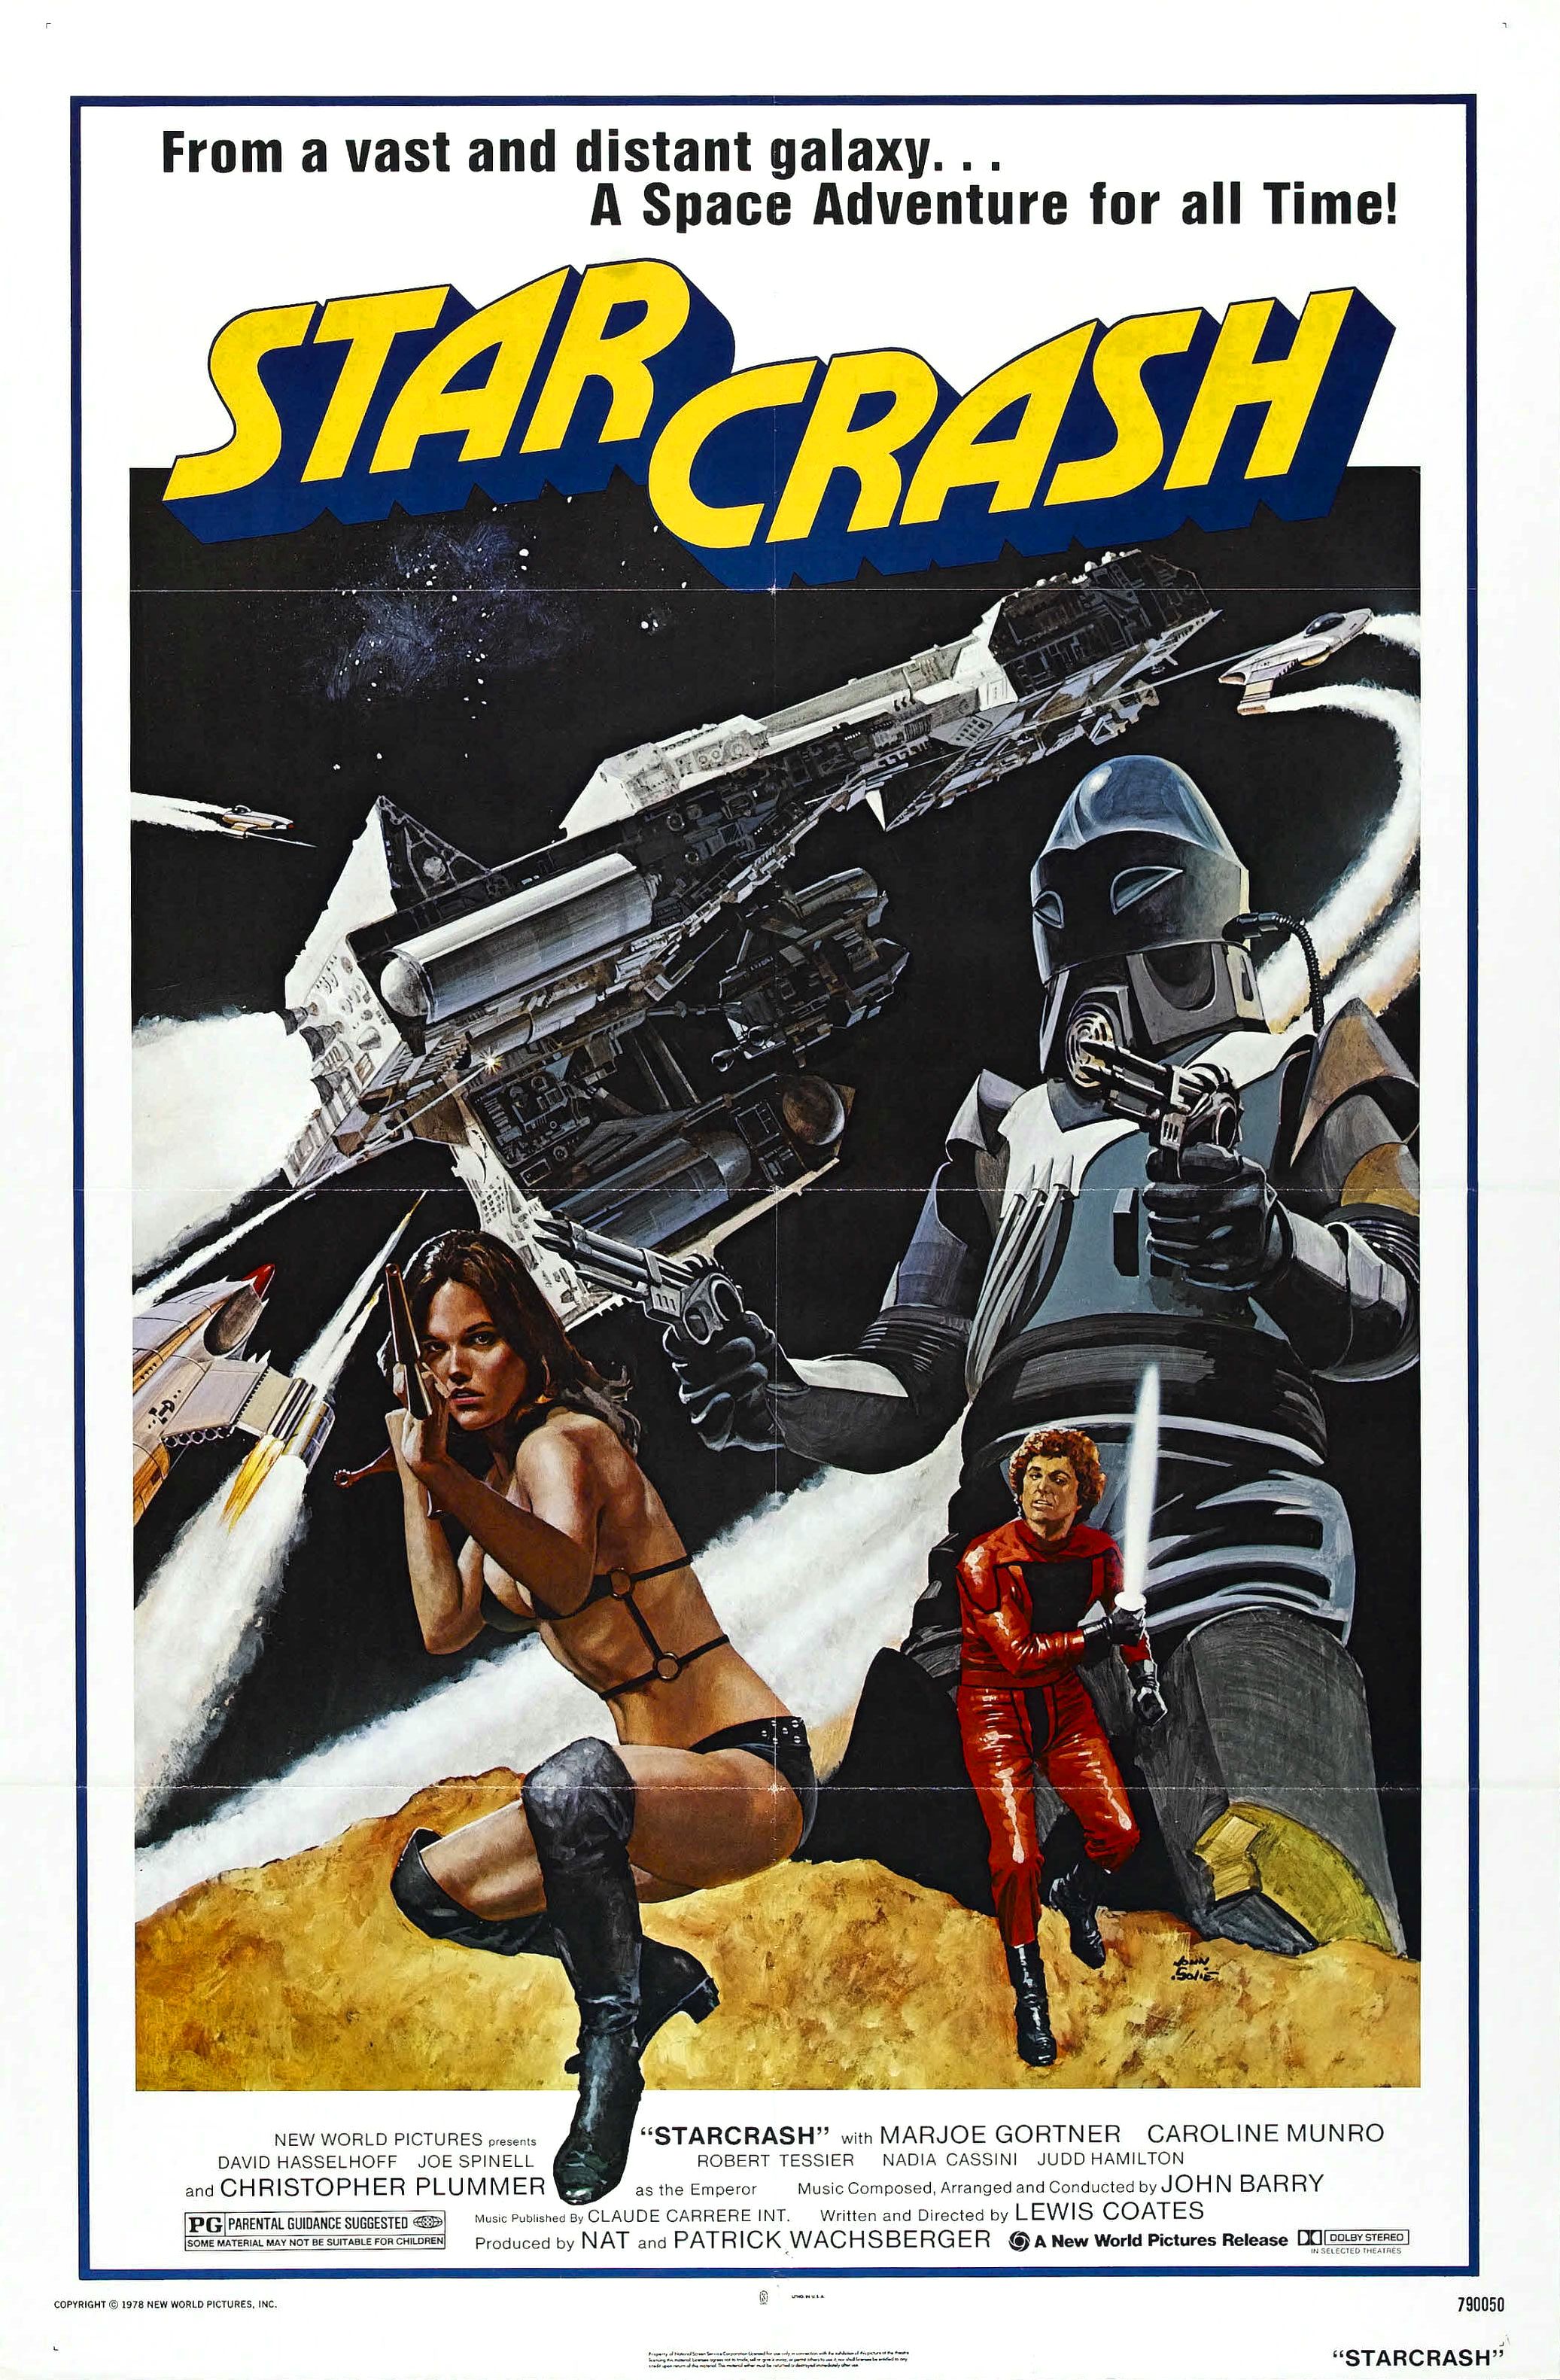 Star Crash Poster Toy-Ventures Magazine Issue 6